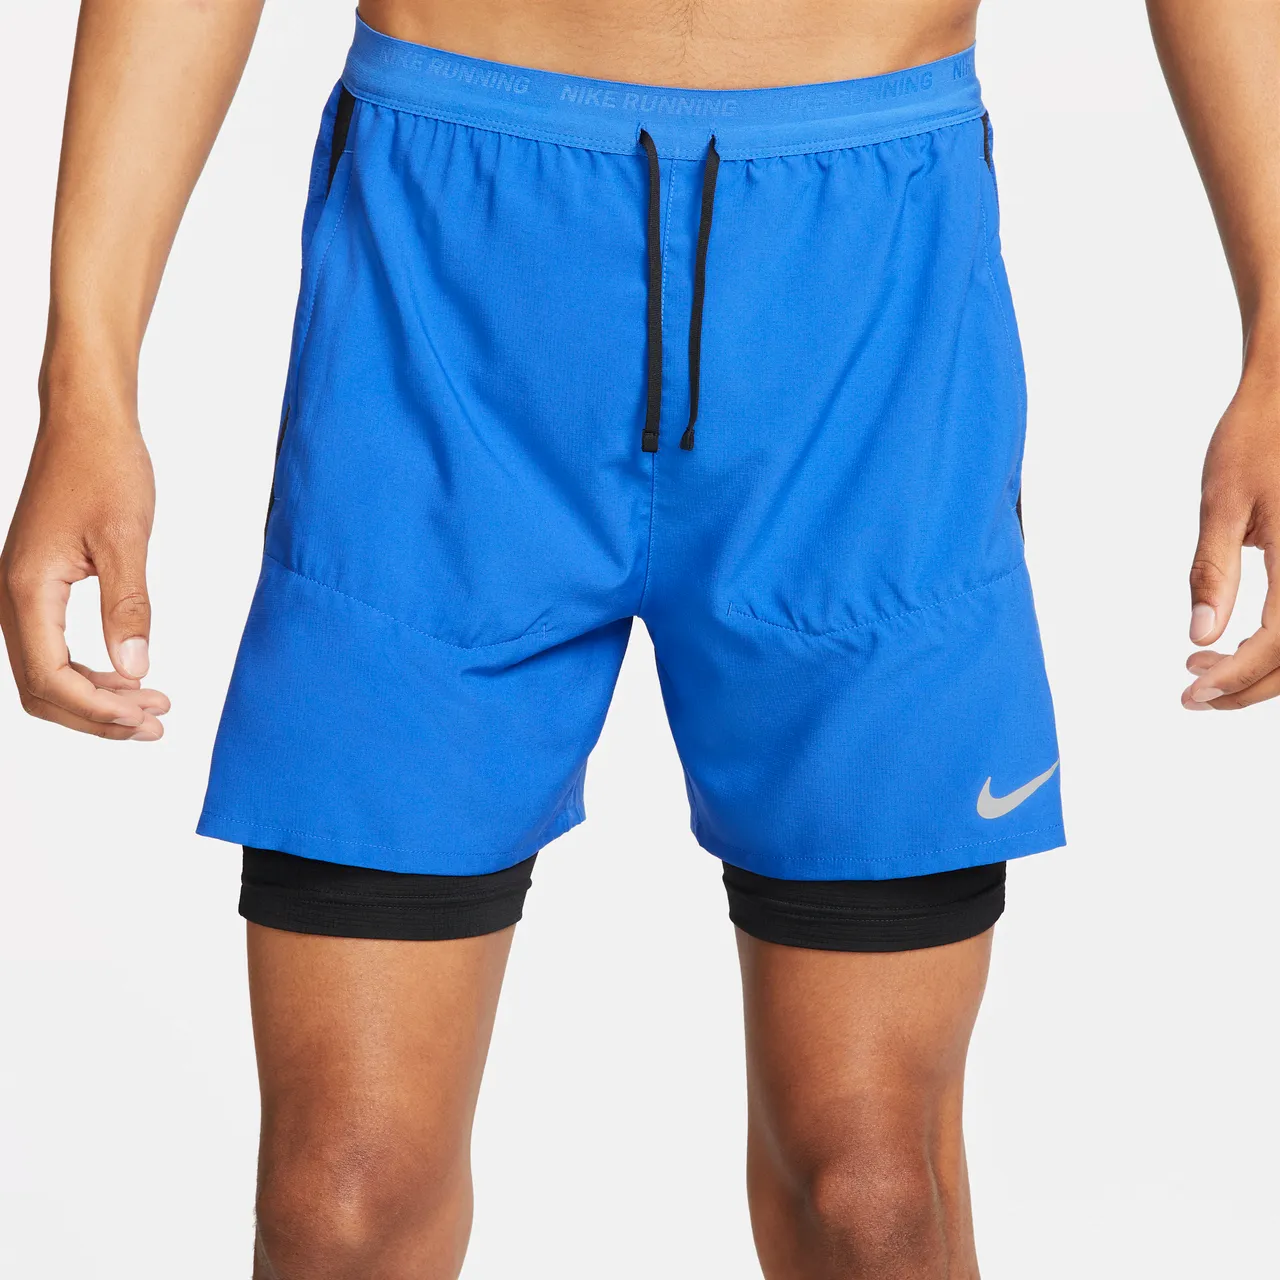 Nike Stride Dri-FIT hybride hardloopshorts voor heren (13 cm) - Blauw